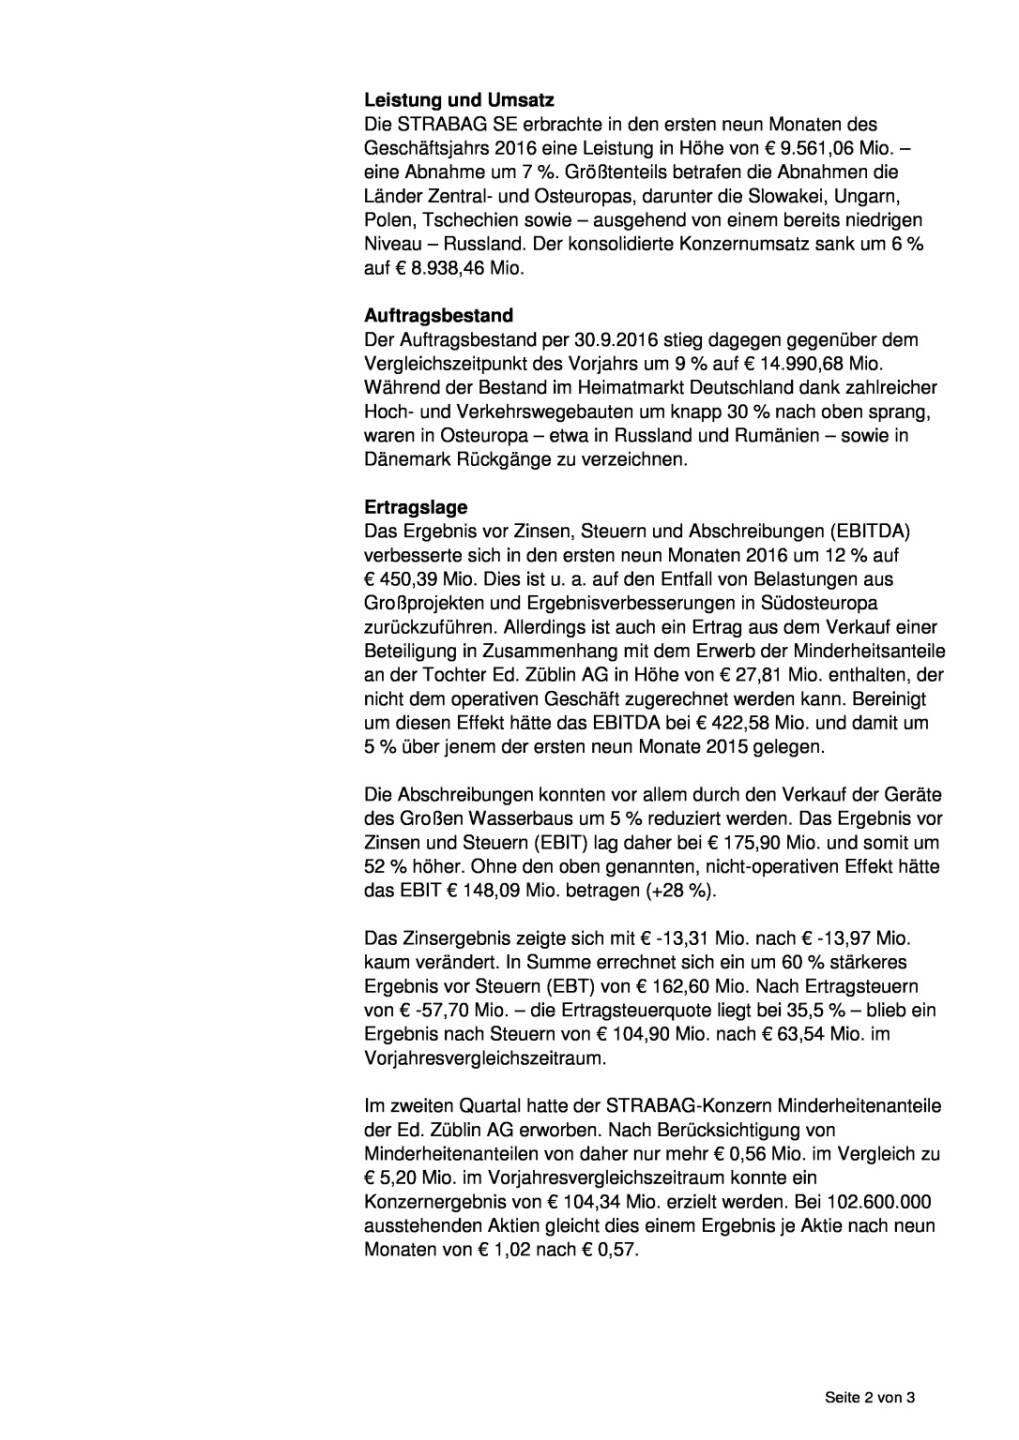 Strabag auf gutem Weg, Seite 2/3, komplettes Dokument unter http://boerse-social.com/static/uploads/file_1999_strabag_auf_gutem_weg.pdf